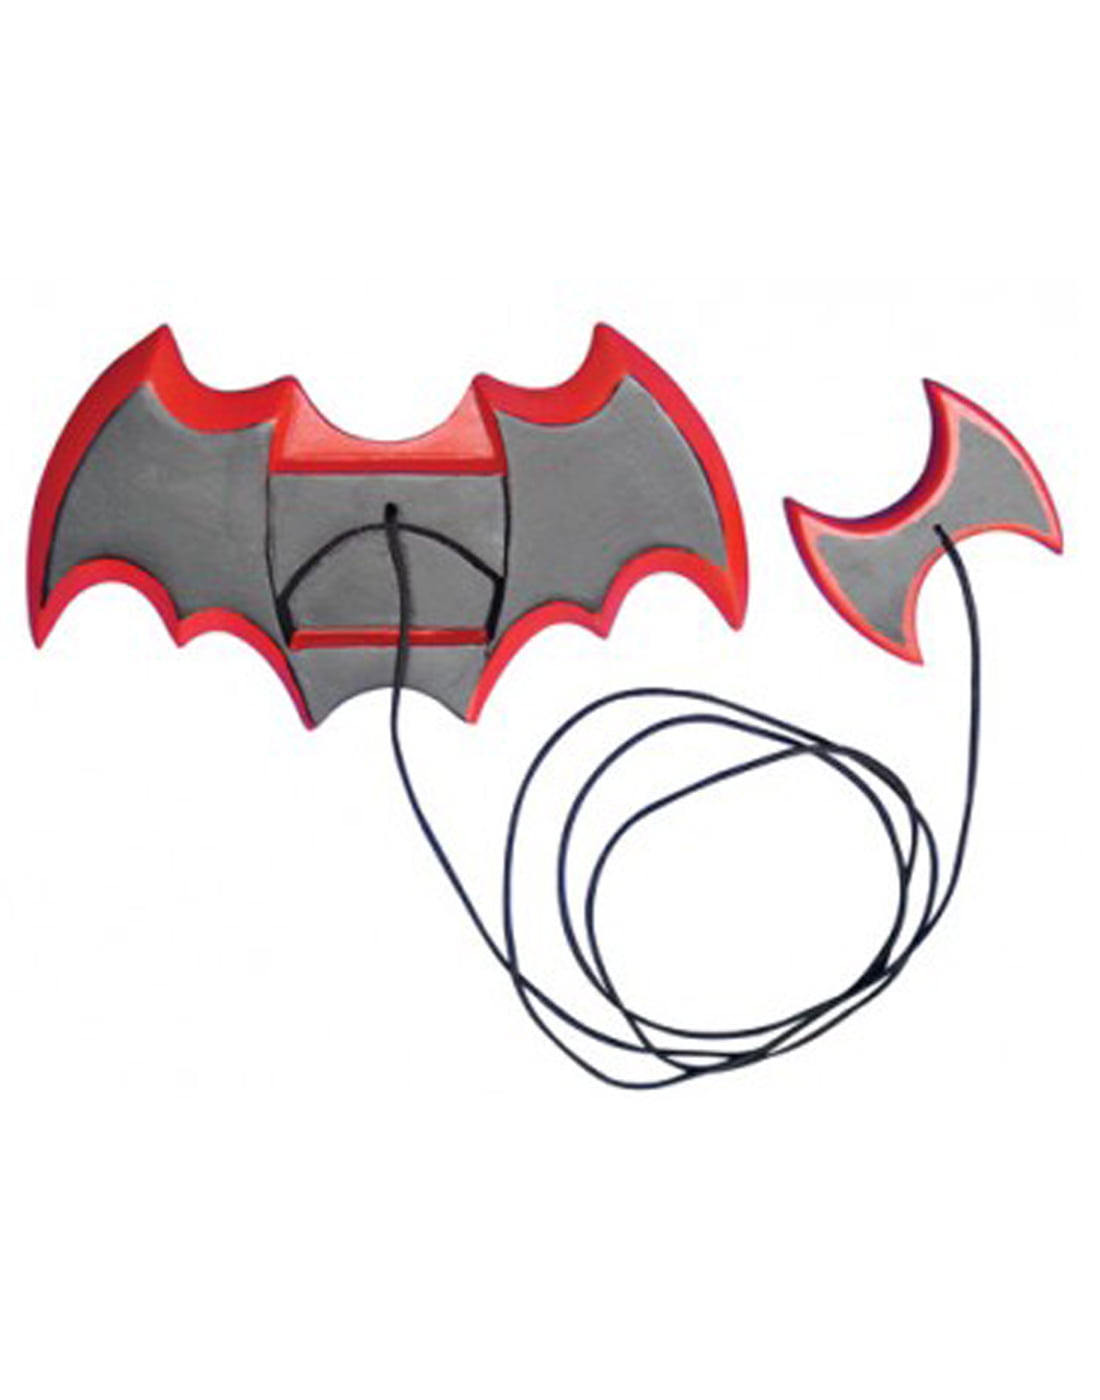 Dc Comics Batman Red Black Child Toy Weapon Grappling Hook 